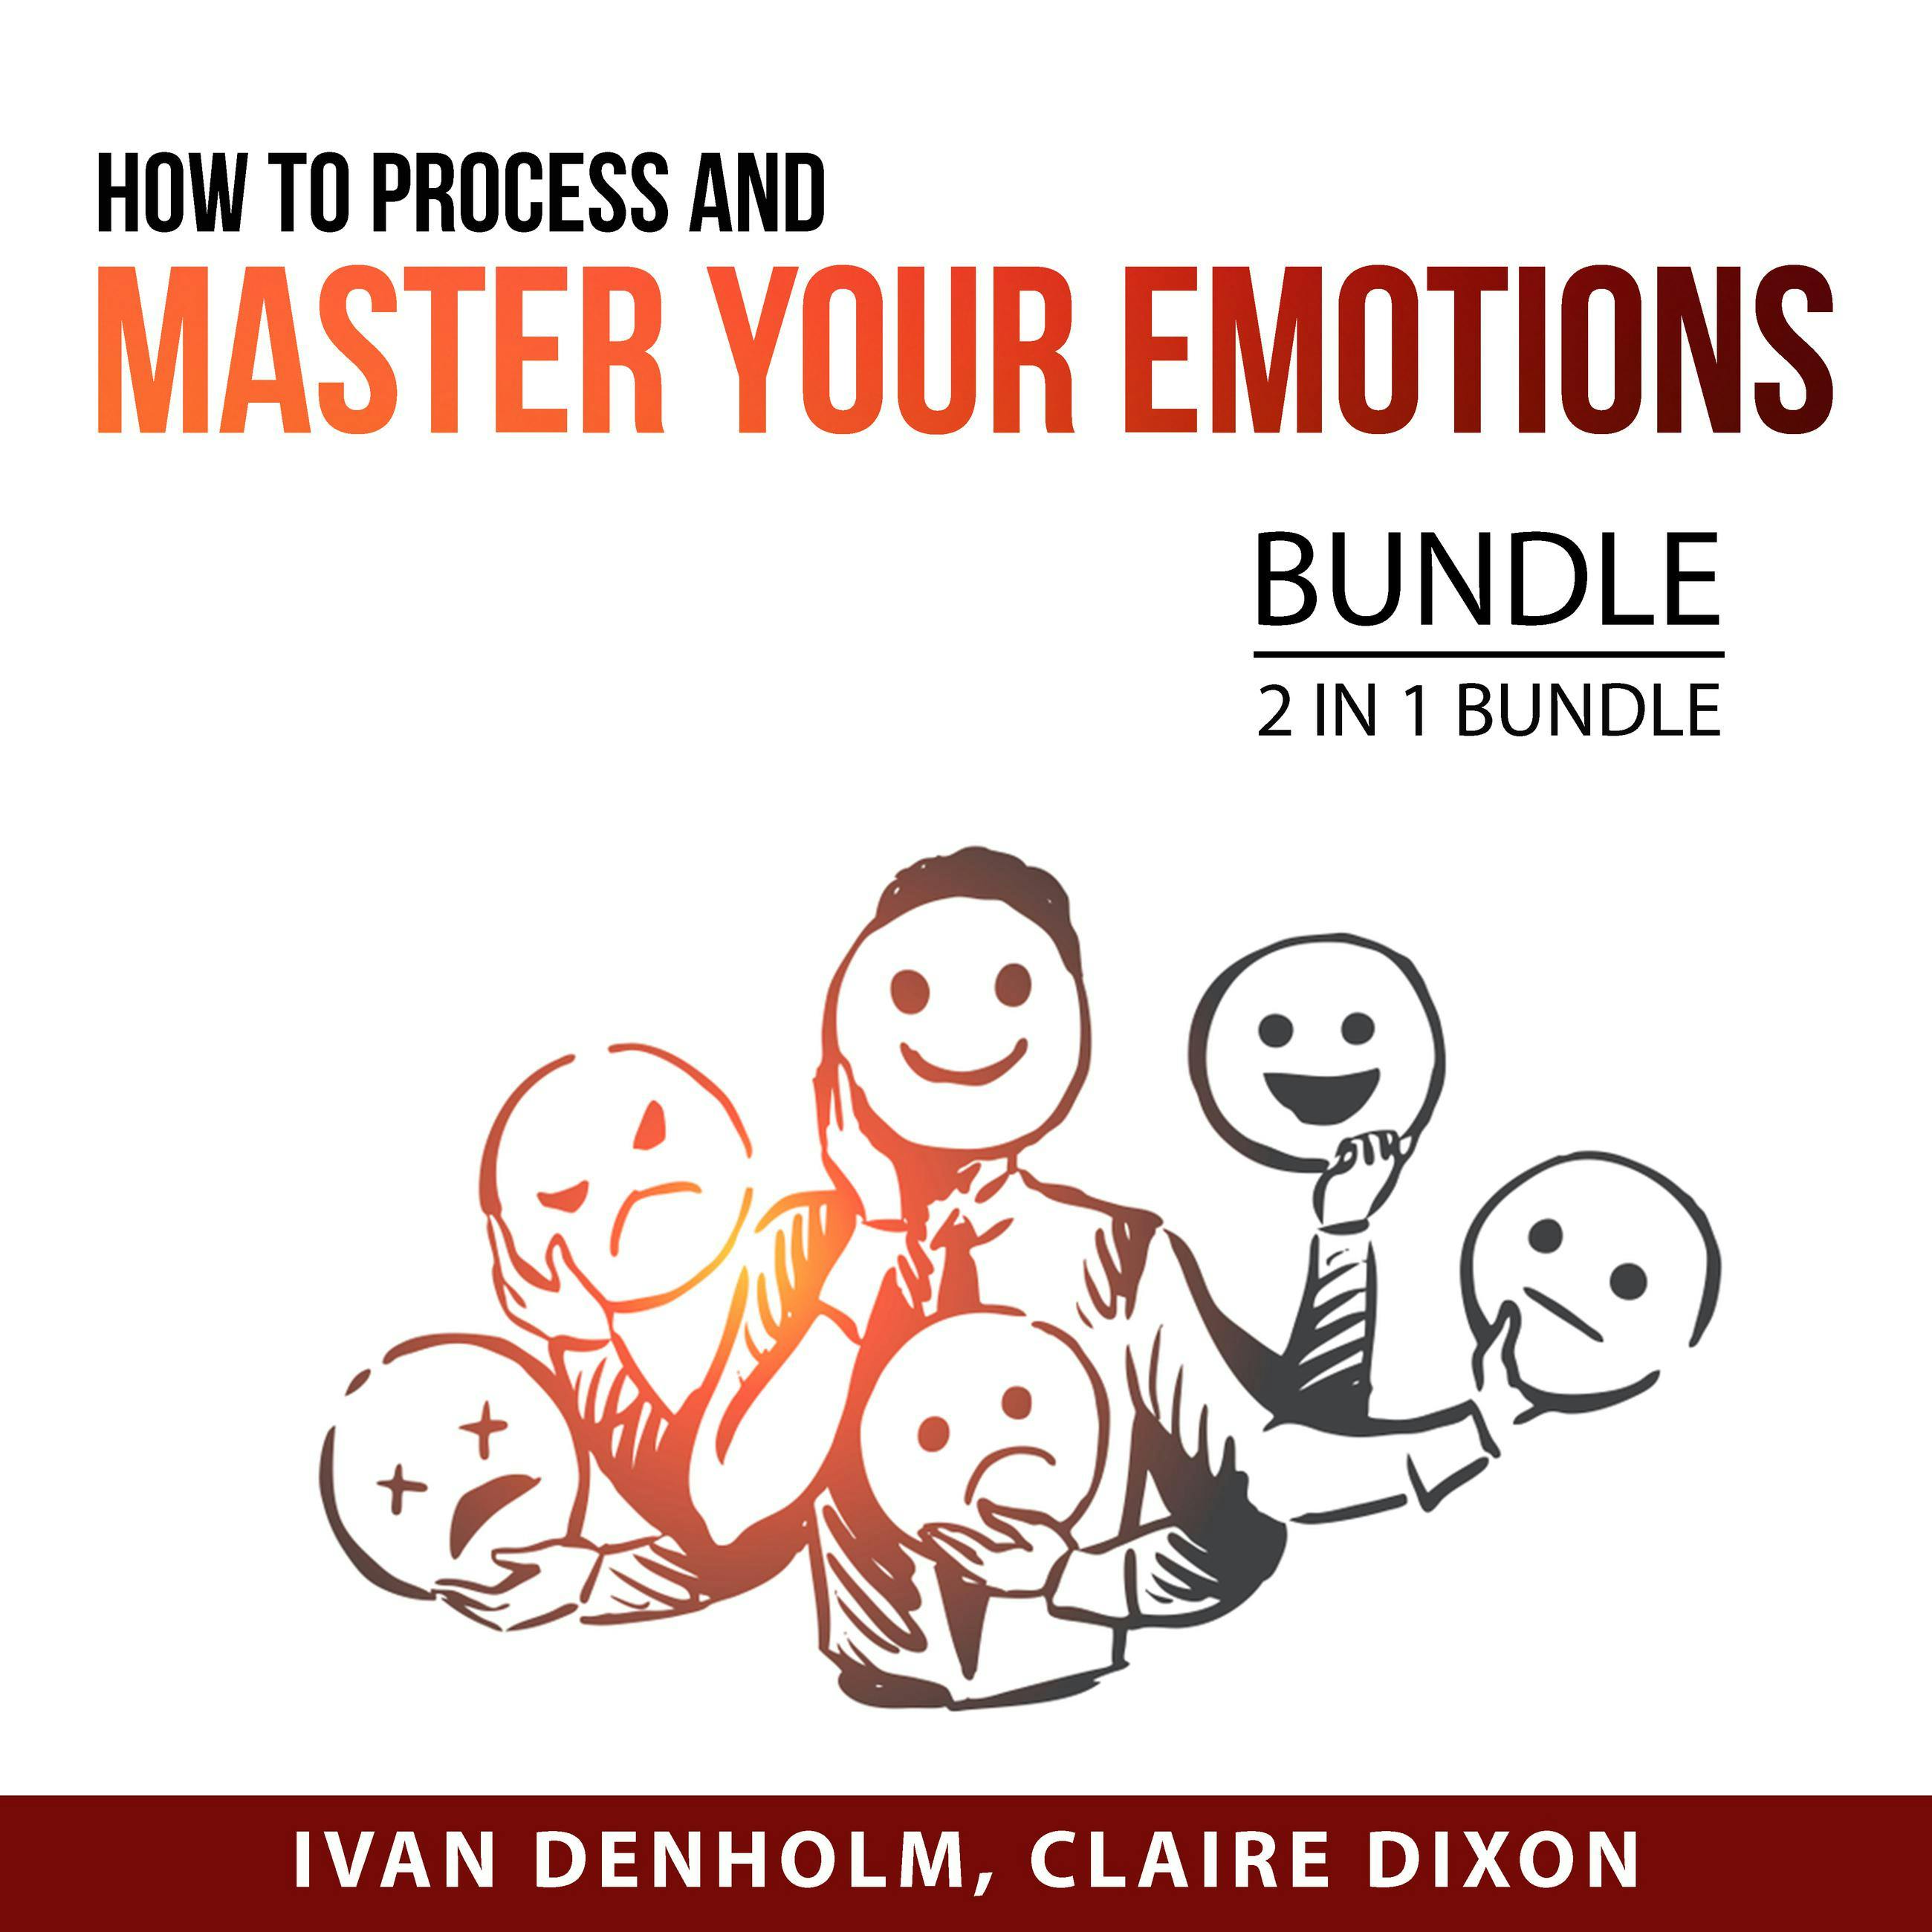 How to Process and Master Your Emotions Bundle, 2 in 1 Bundle:: Master Your Feelings and How to Feel Good - Claire Dixon, Ivan Denholm